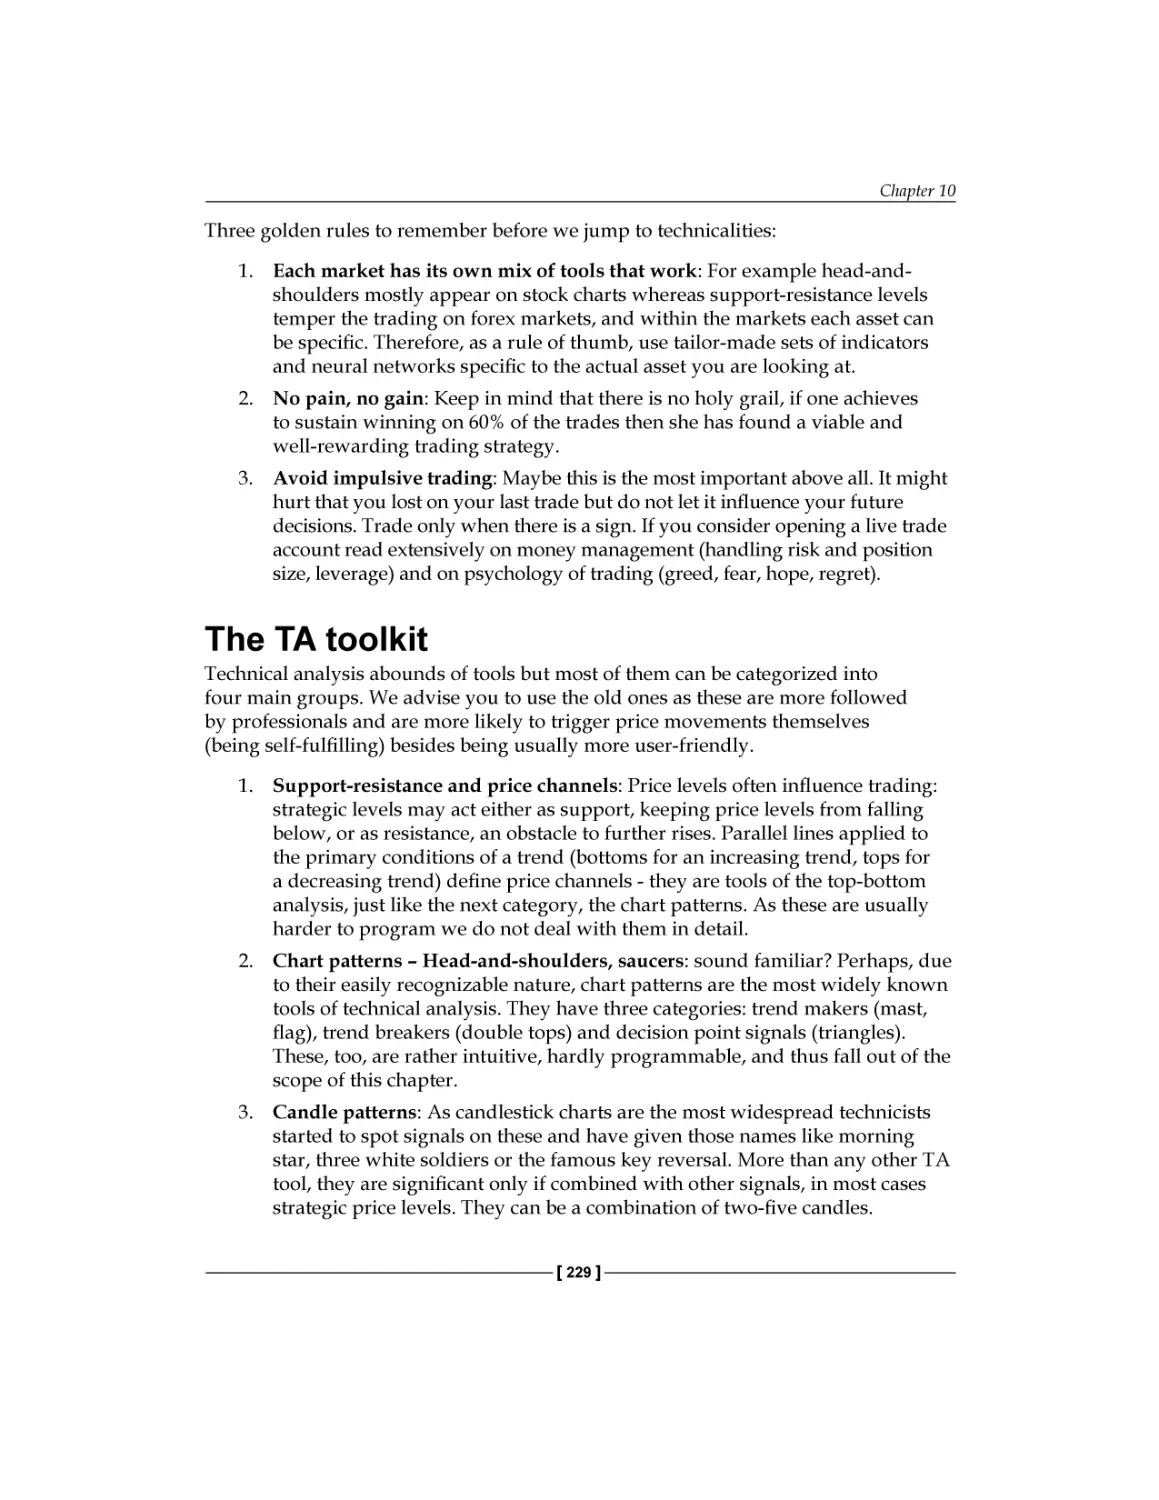 The TA toolkit